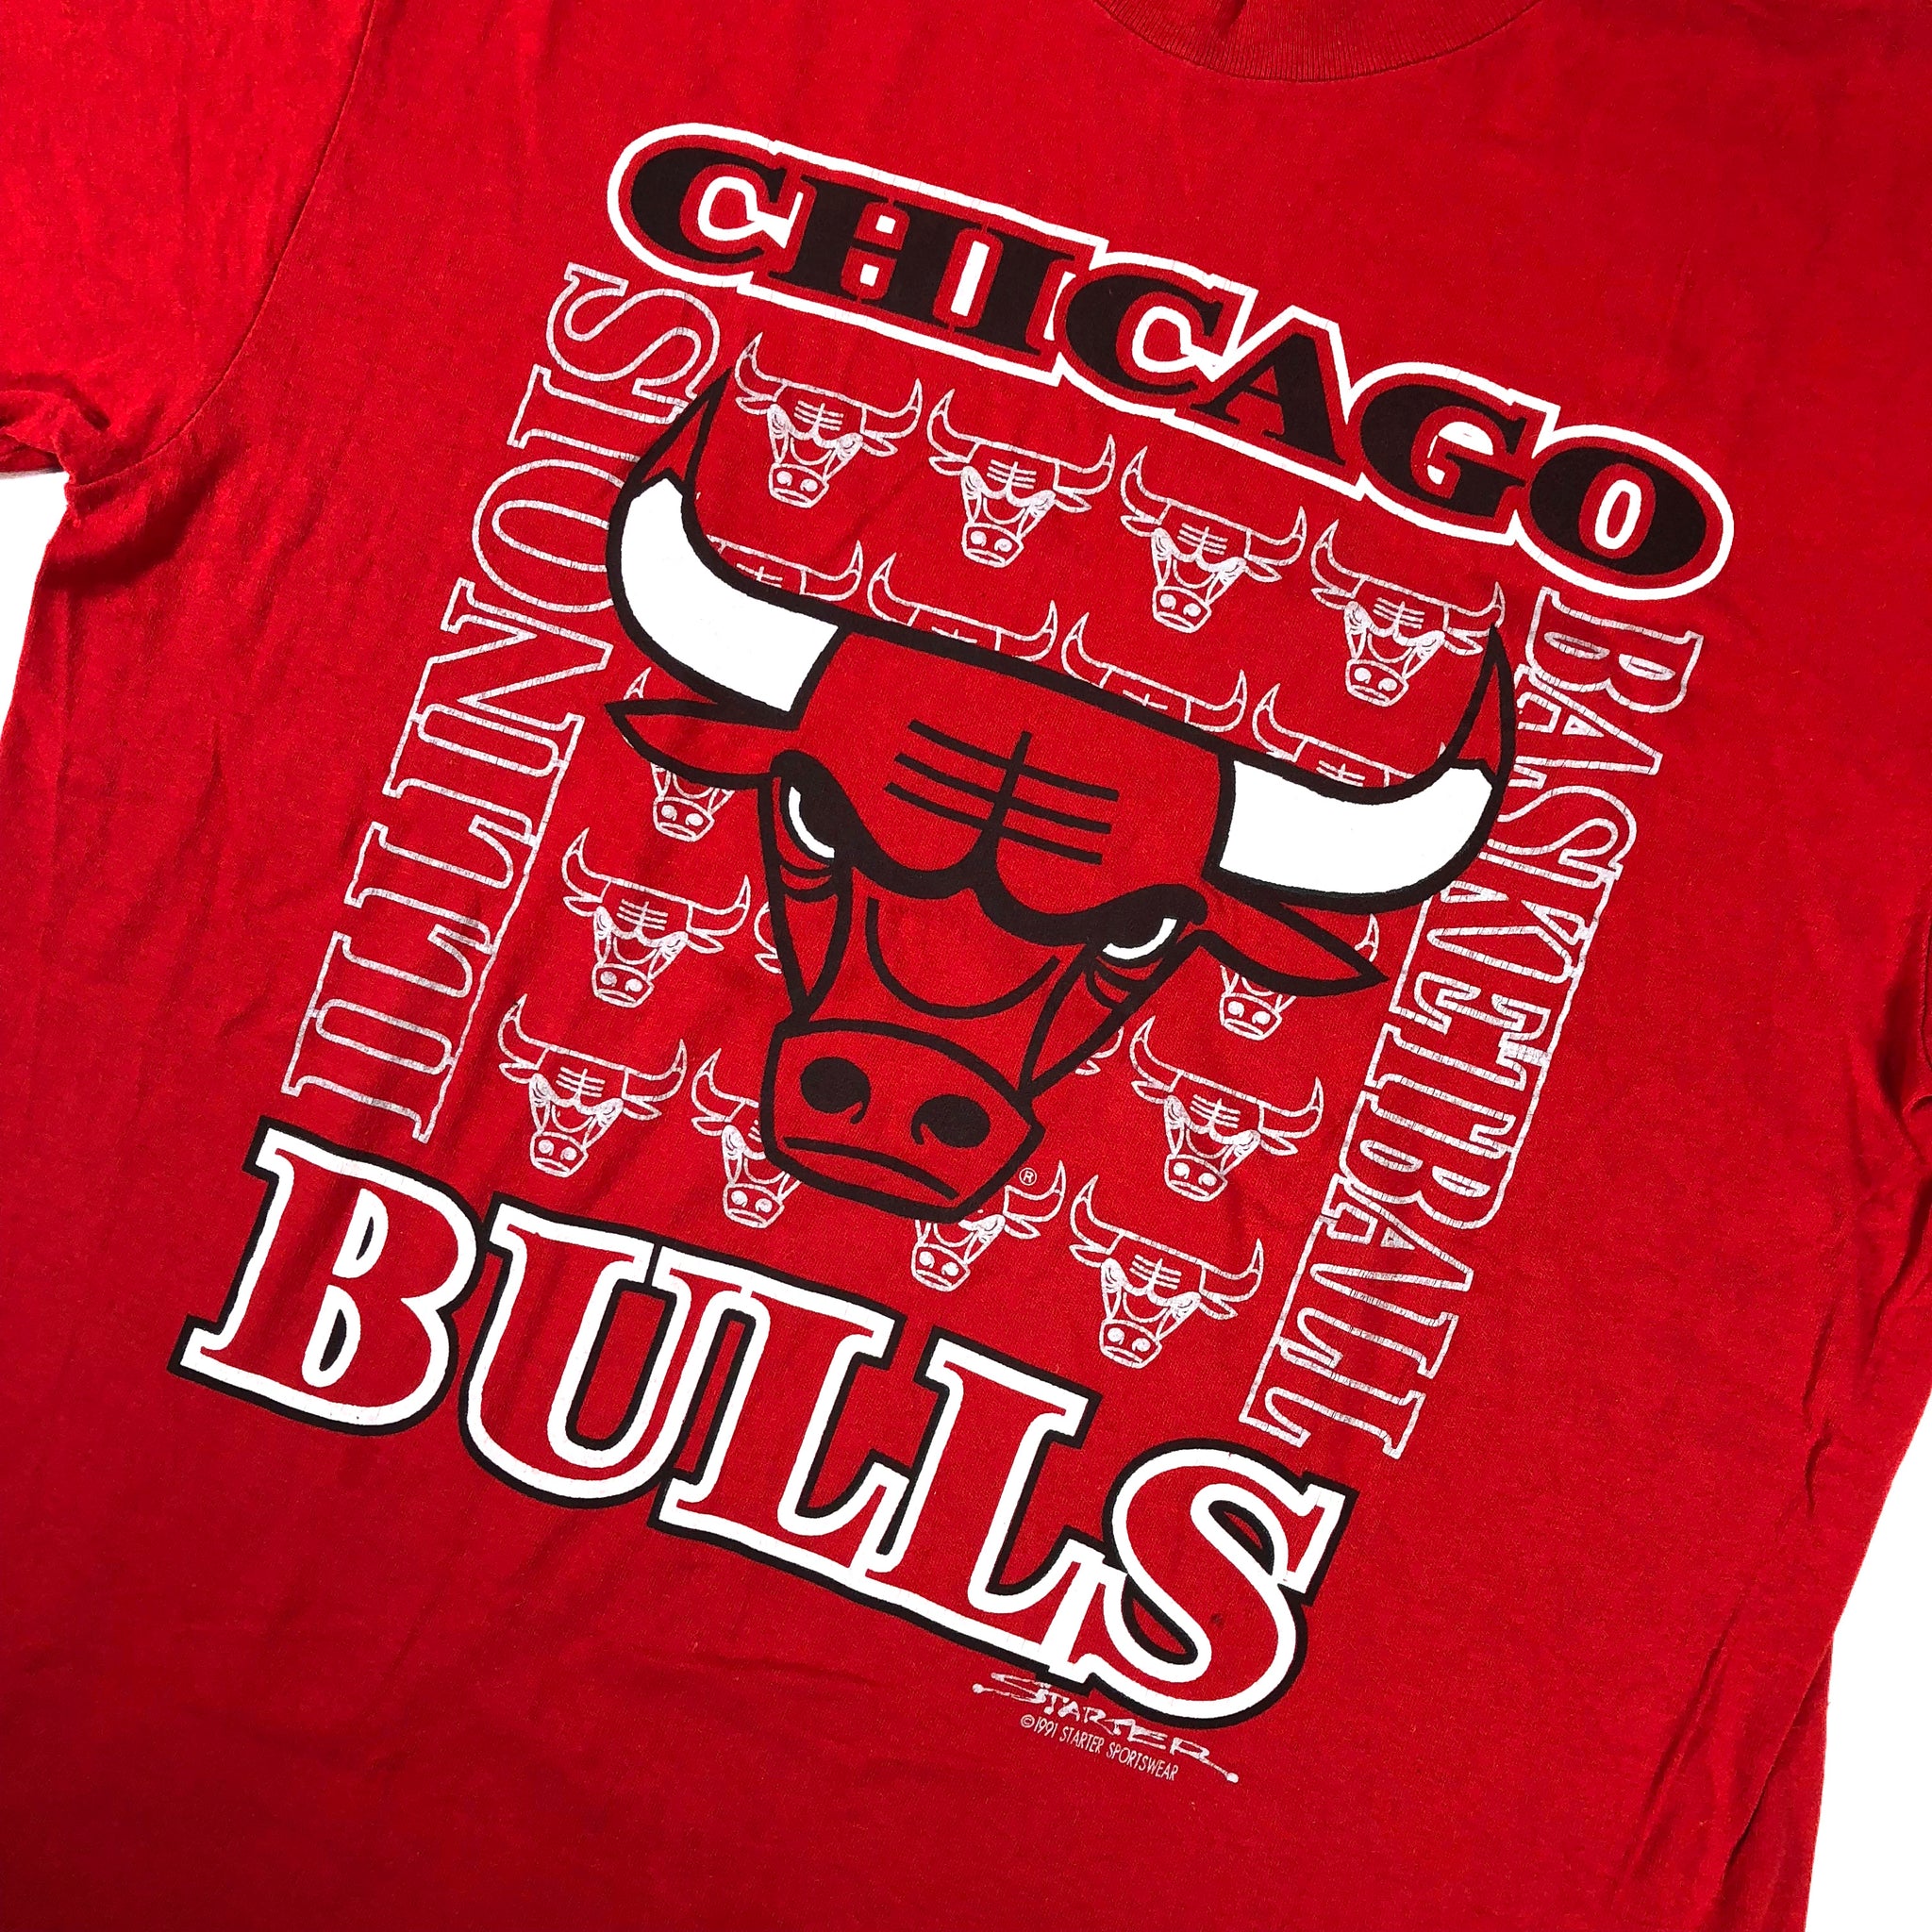 Chicago Bulls Vintage Basketball Shirts for sale